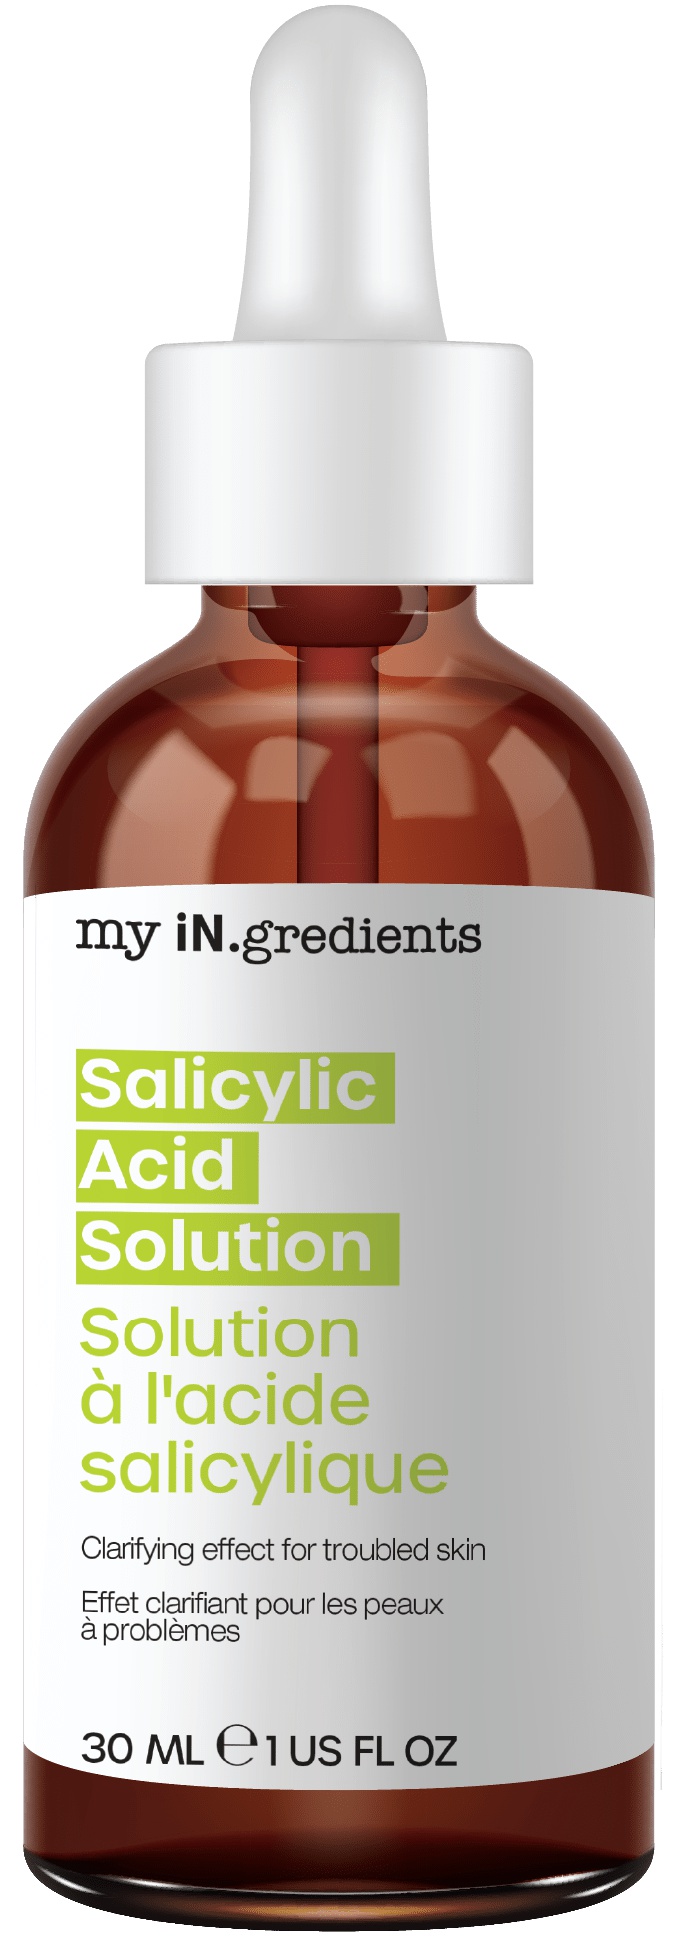 My in. gredients Salicylic Acid Solution